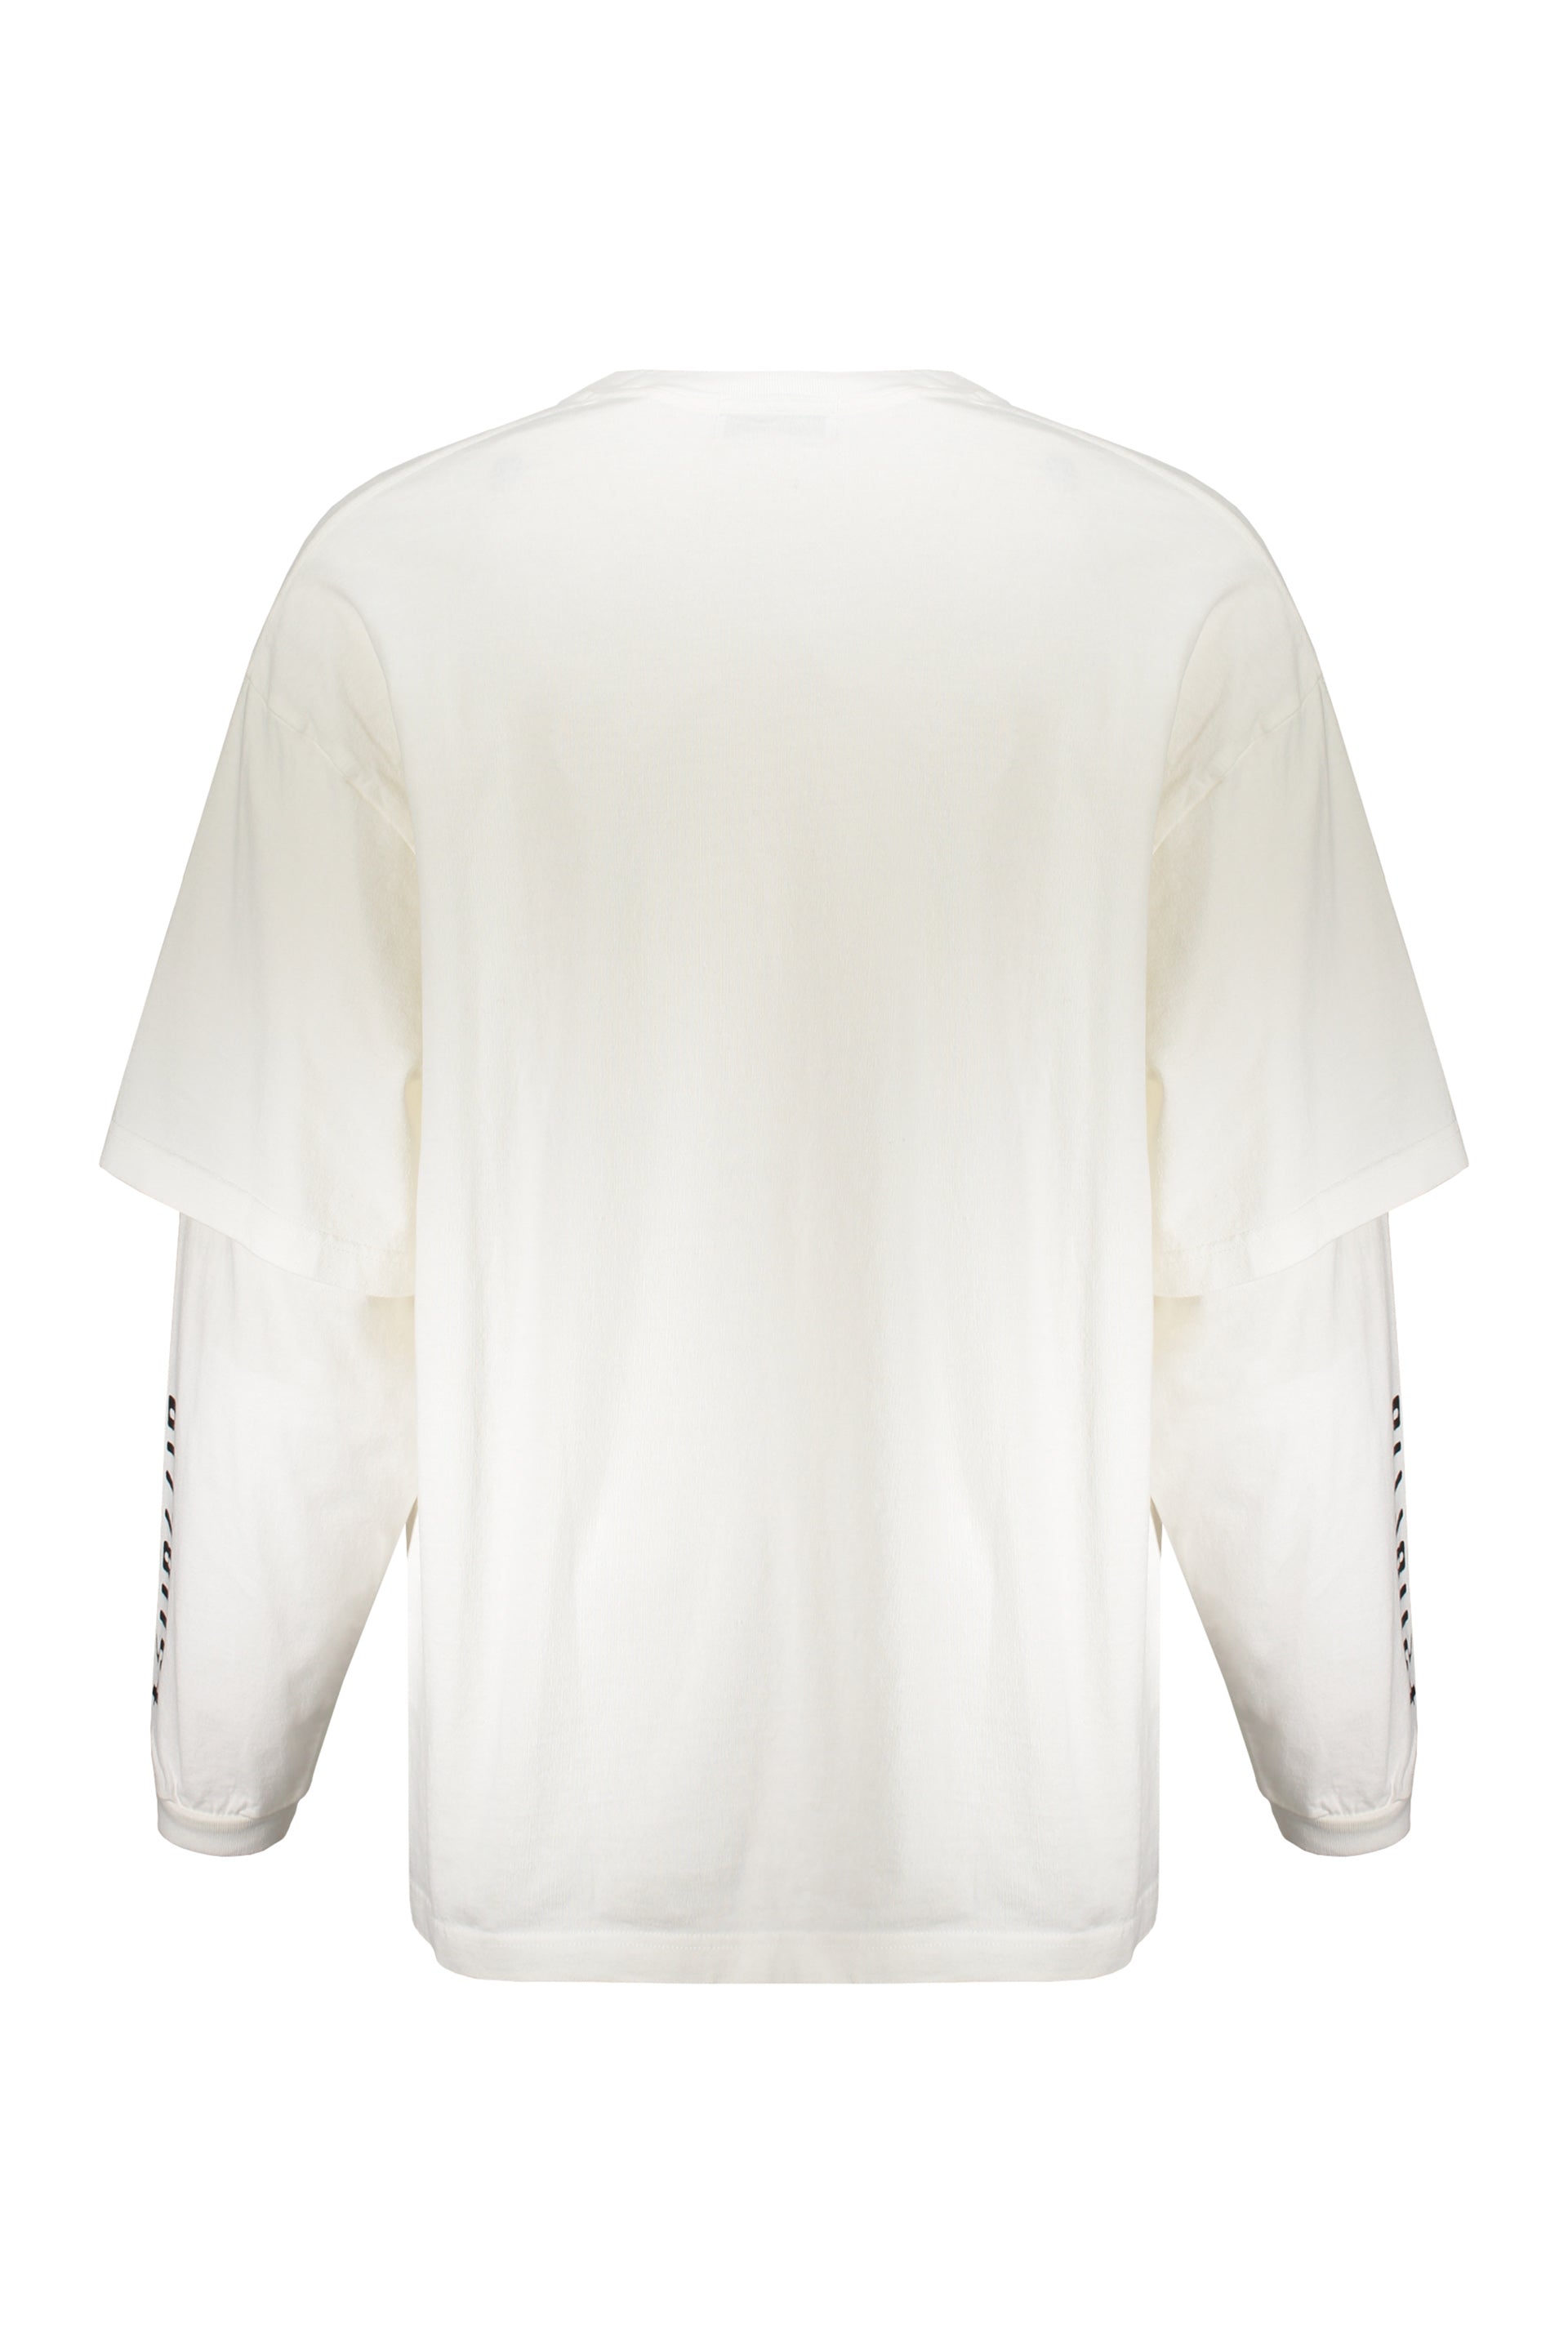 AMBUSH-OUTLET-SALE-Long-sleeve-cotton-t-shirt-Shirts-ARCHIVE-COLLECTION-2.jpg